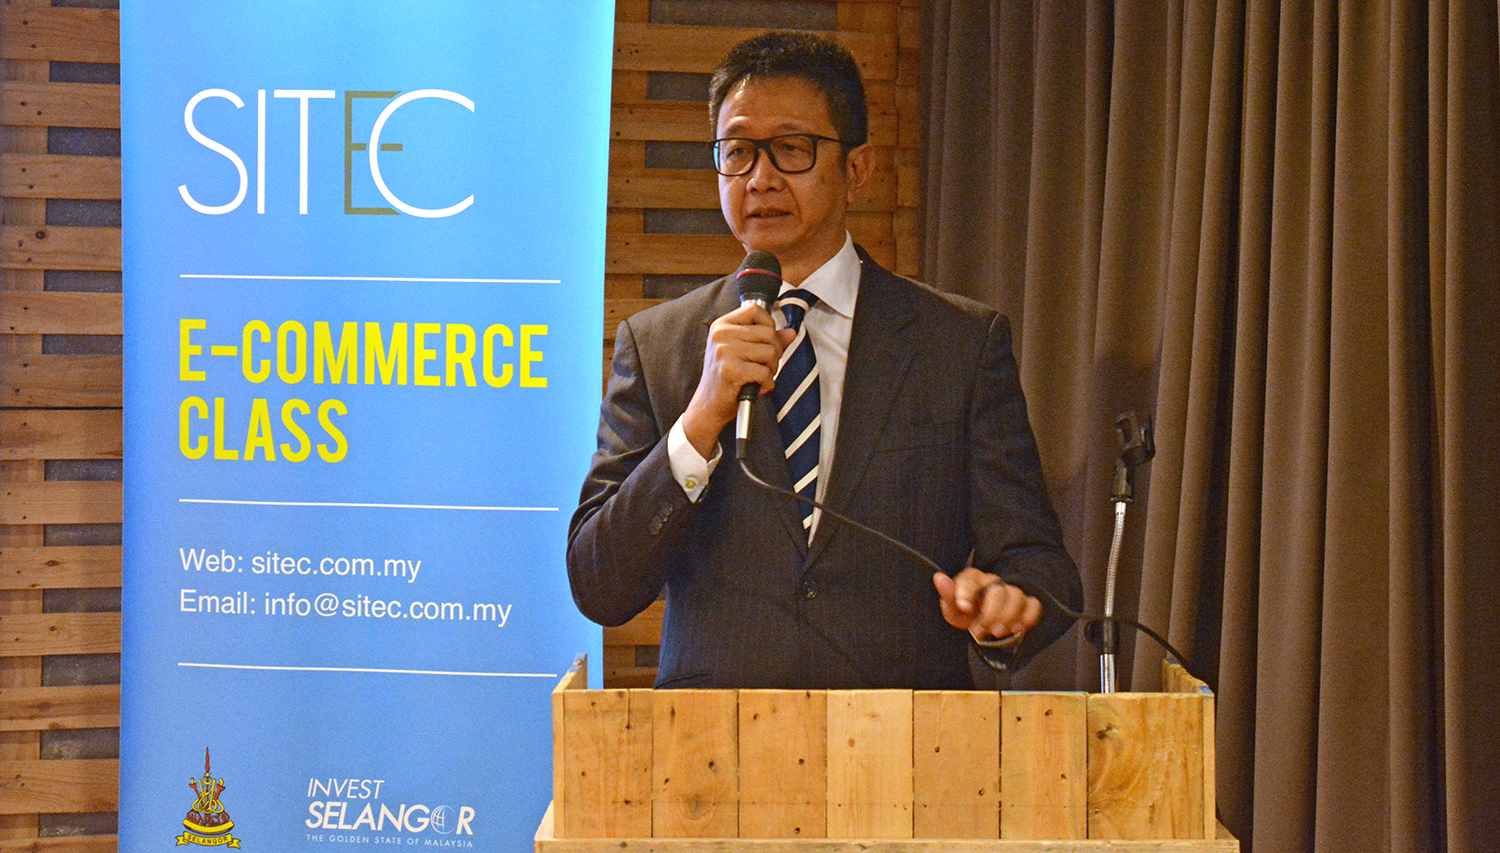 Selangor boosts digital economy efforts for citizens through Sitec